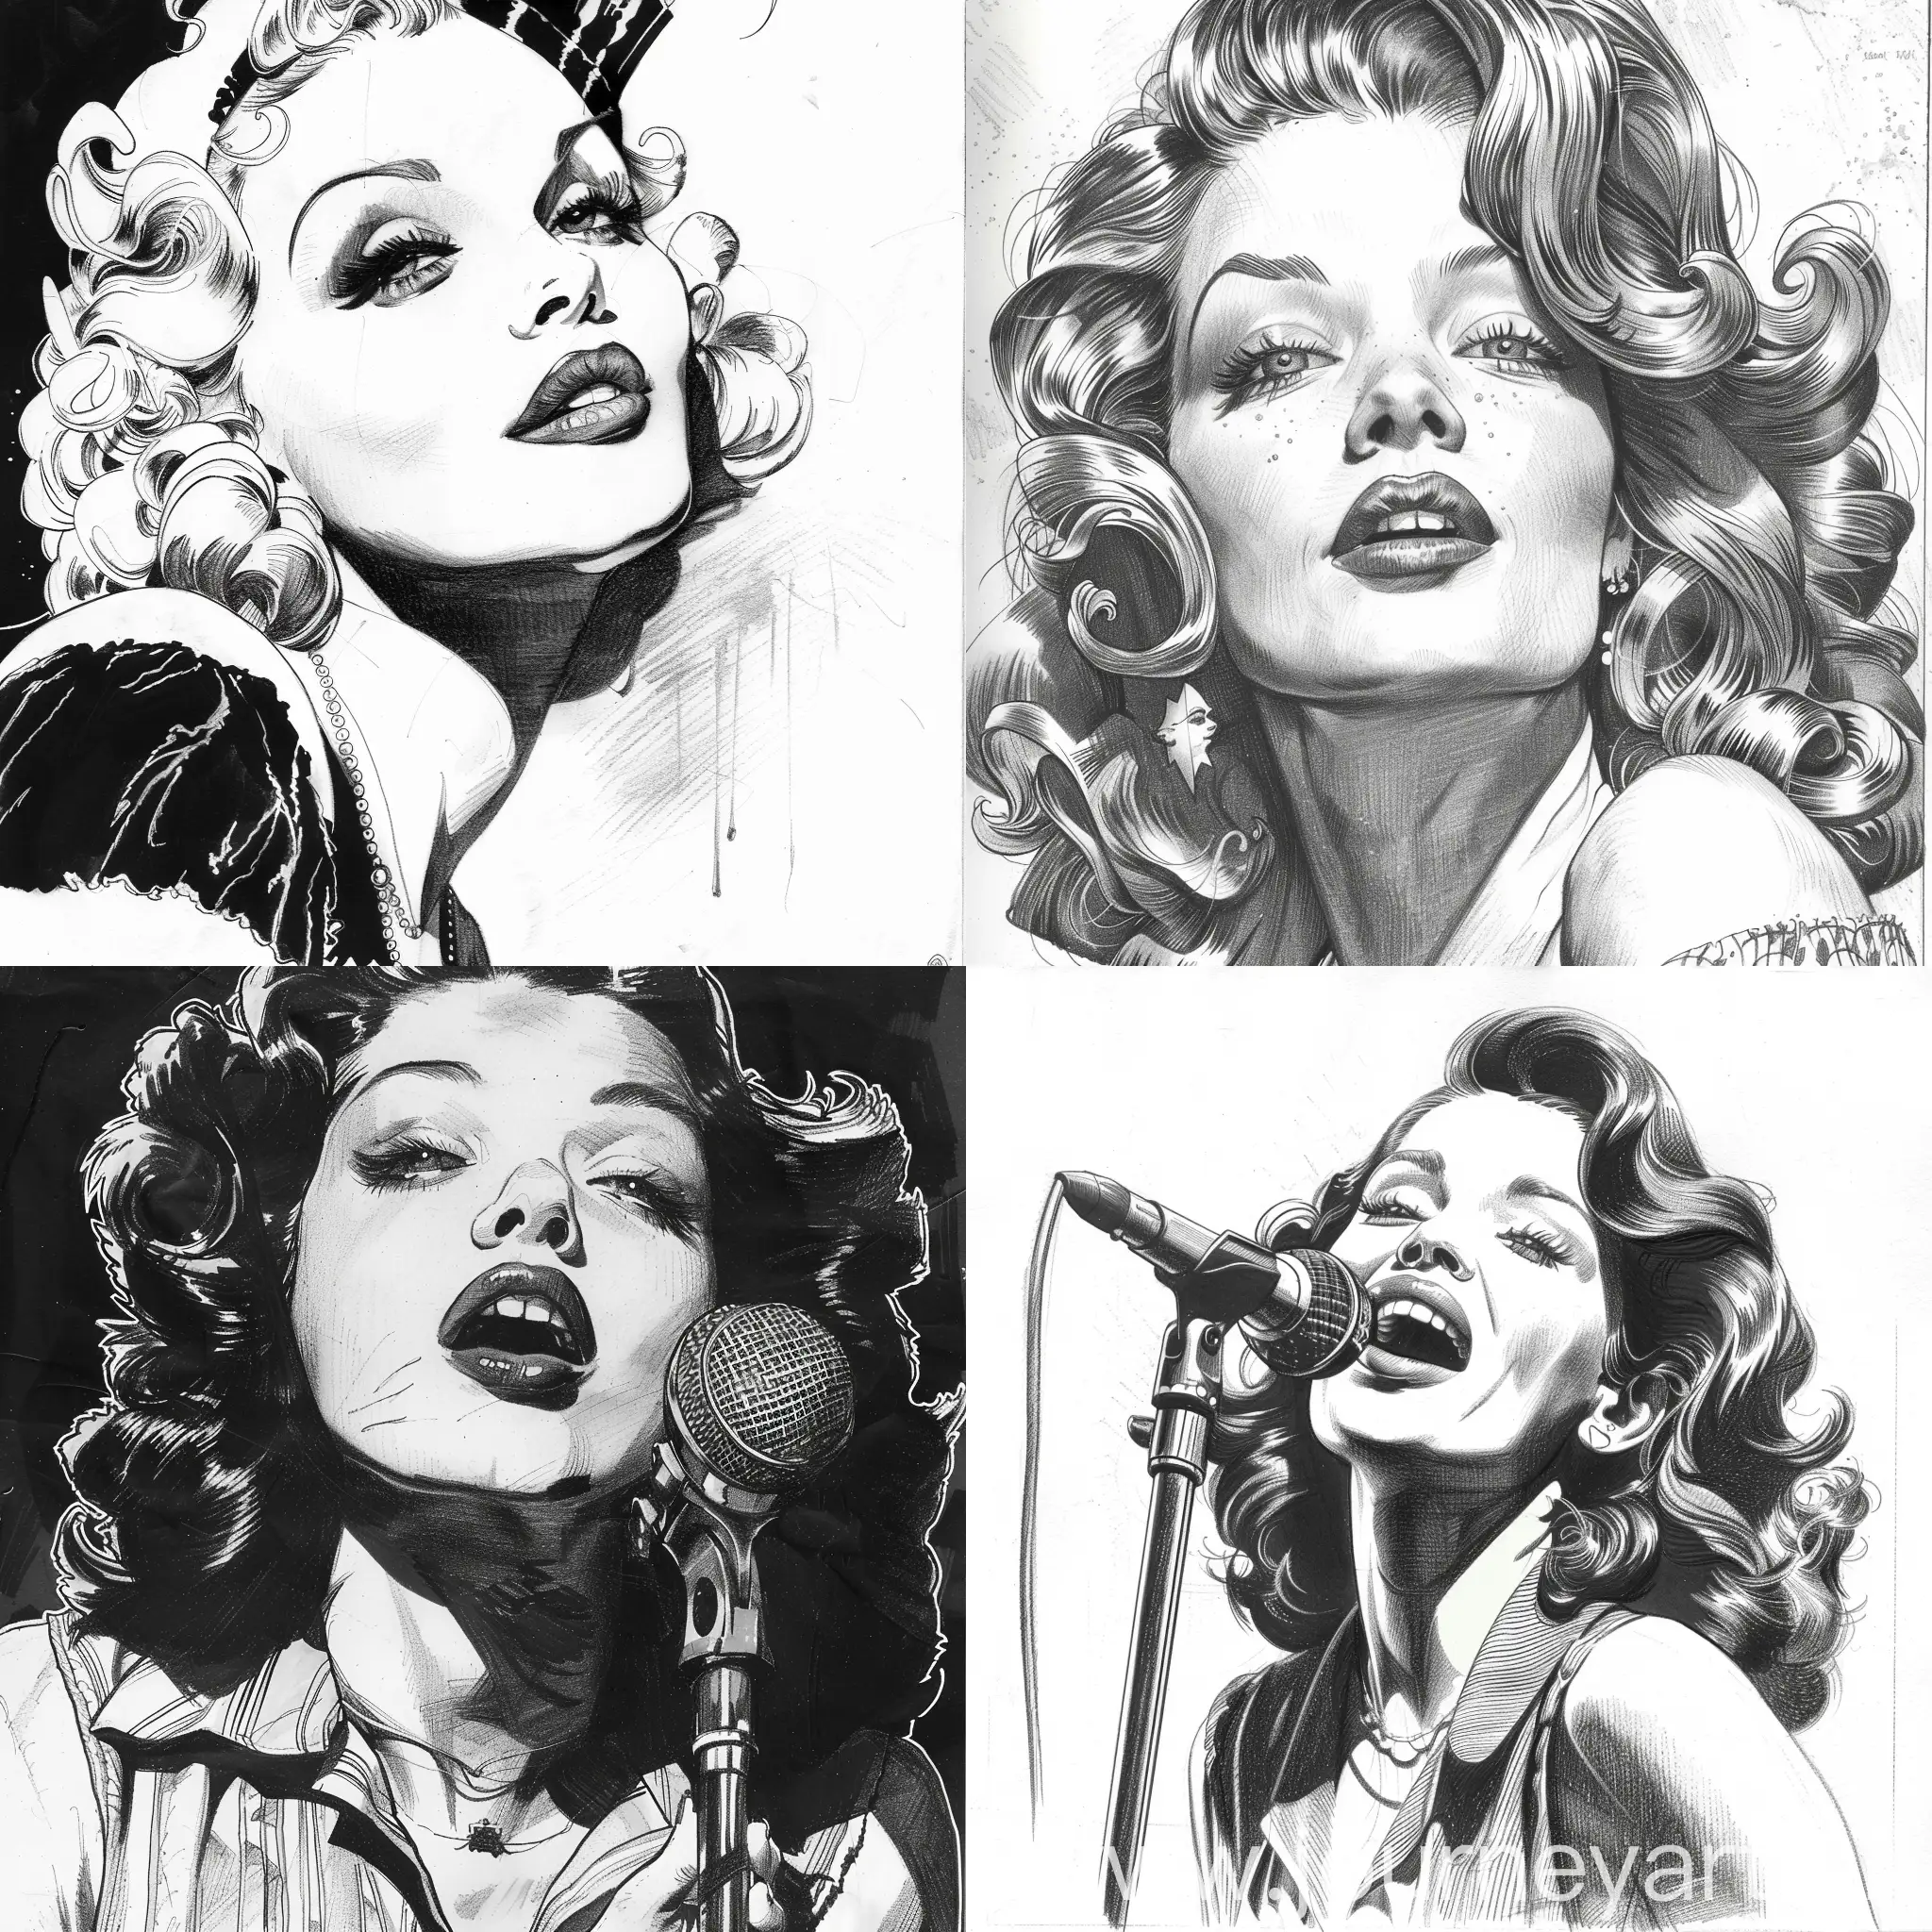 Comic pencils art of a 1940s cabaret singer